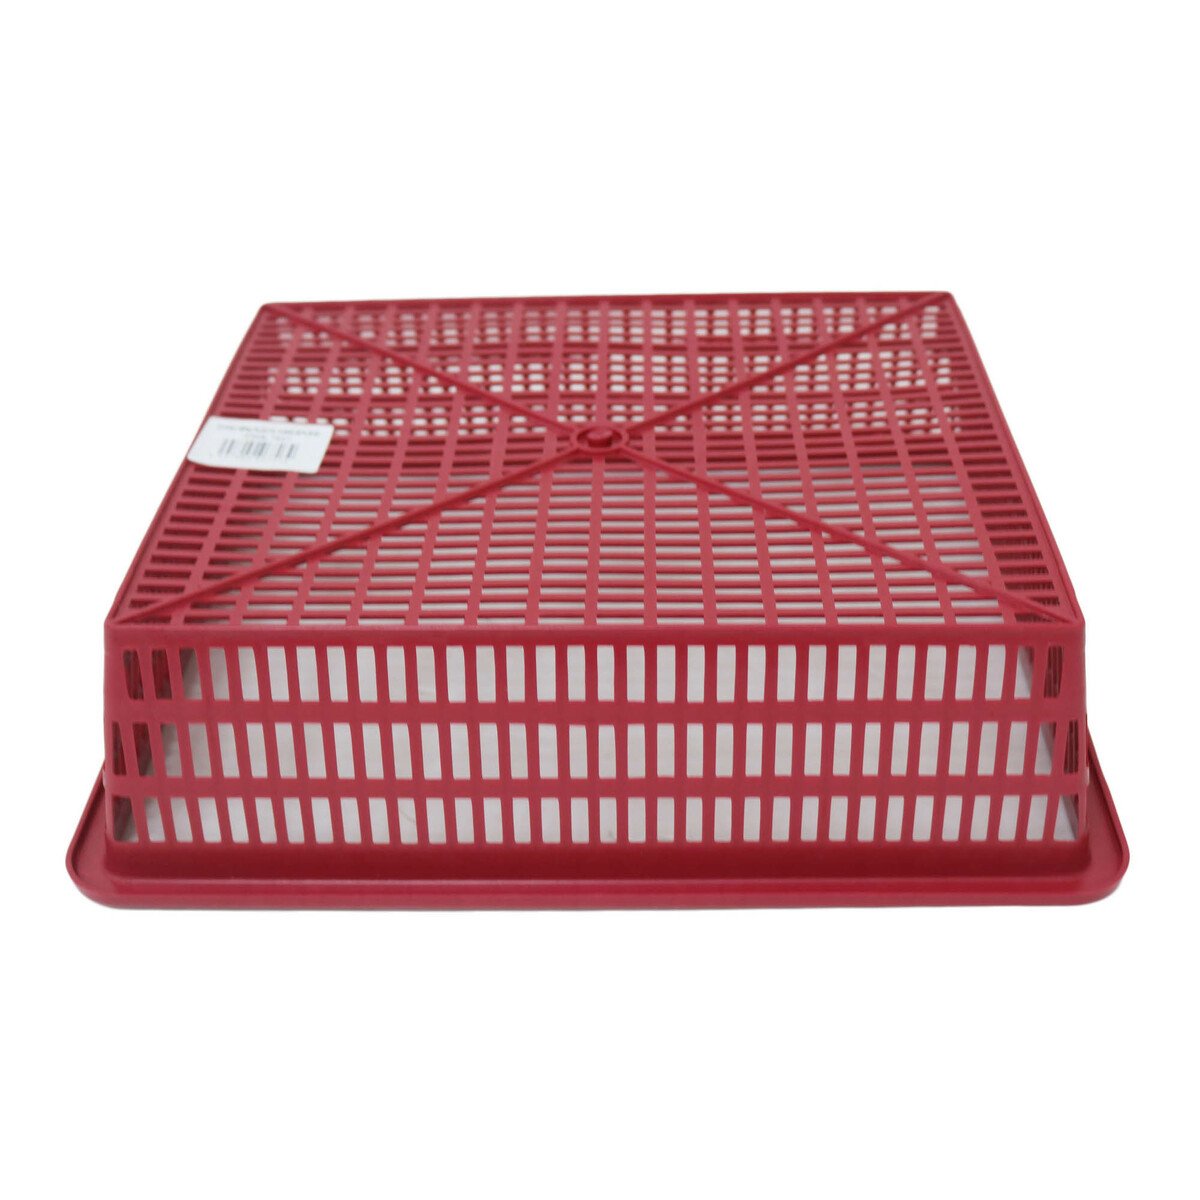 Century Red Basket Tray 30cm 6703C